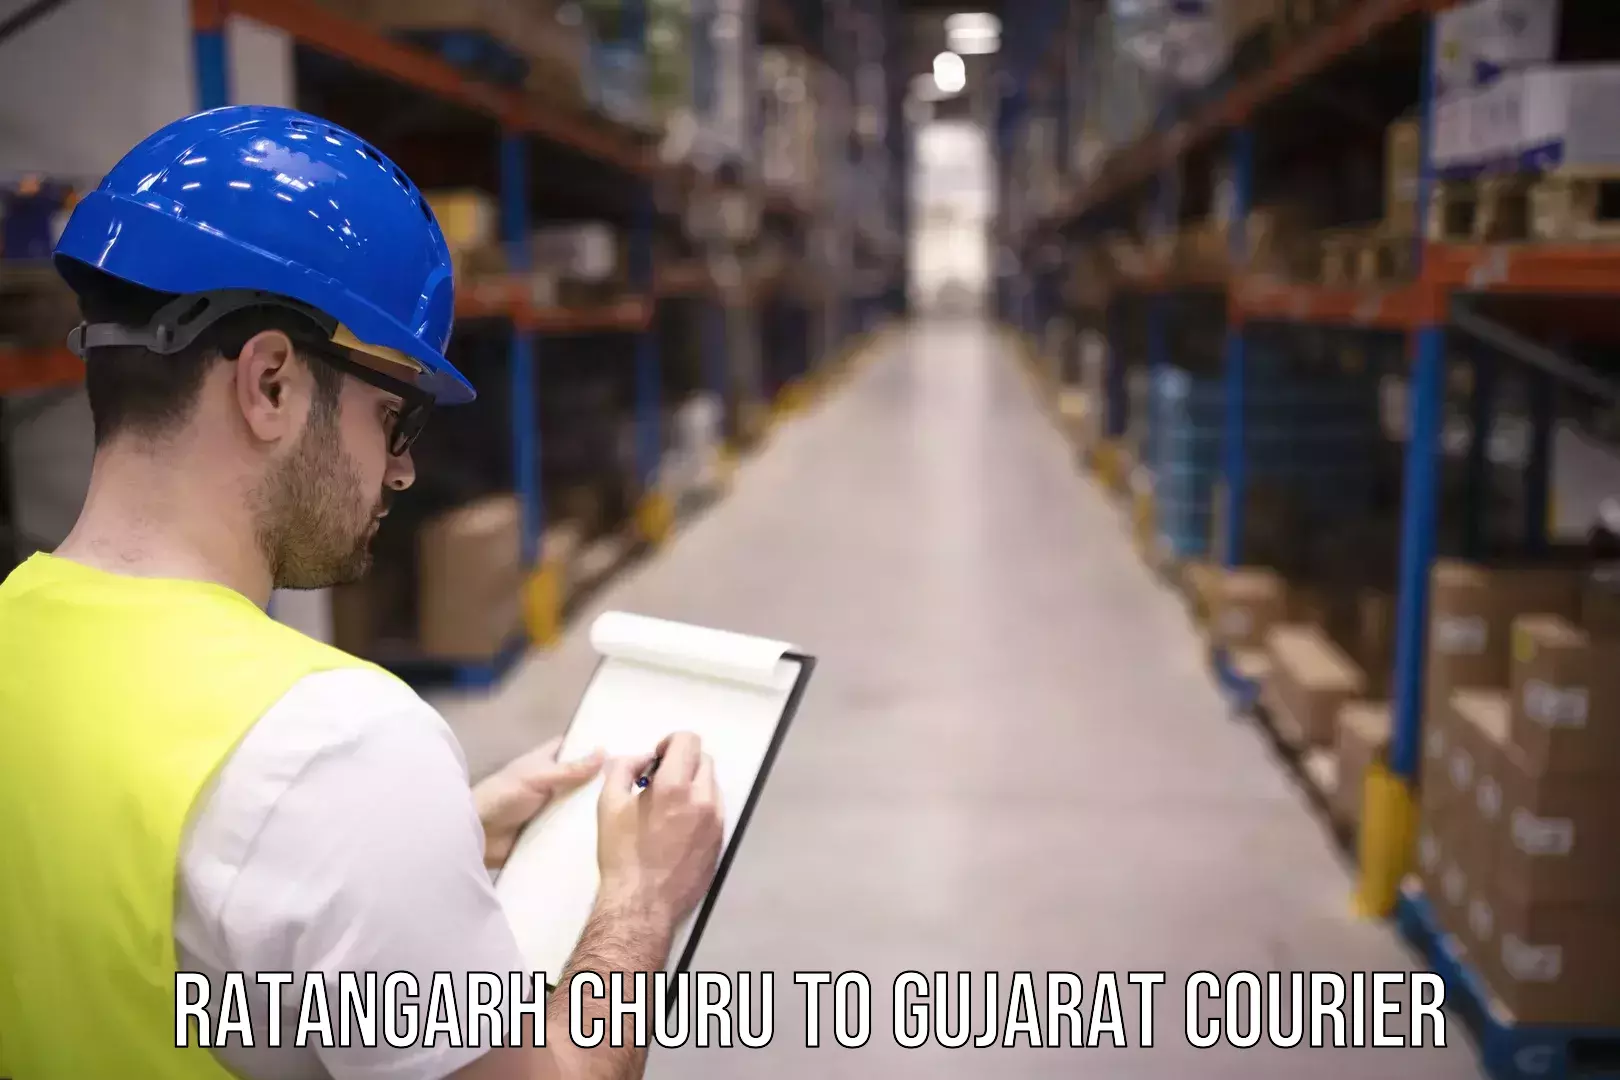 Subscription-based courier Ratangarh Churu to Gujarat